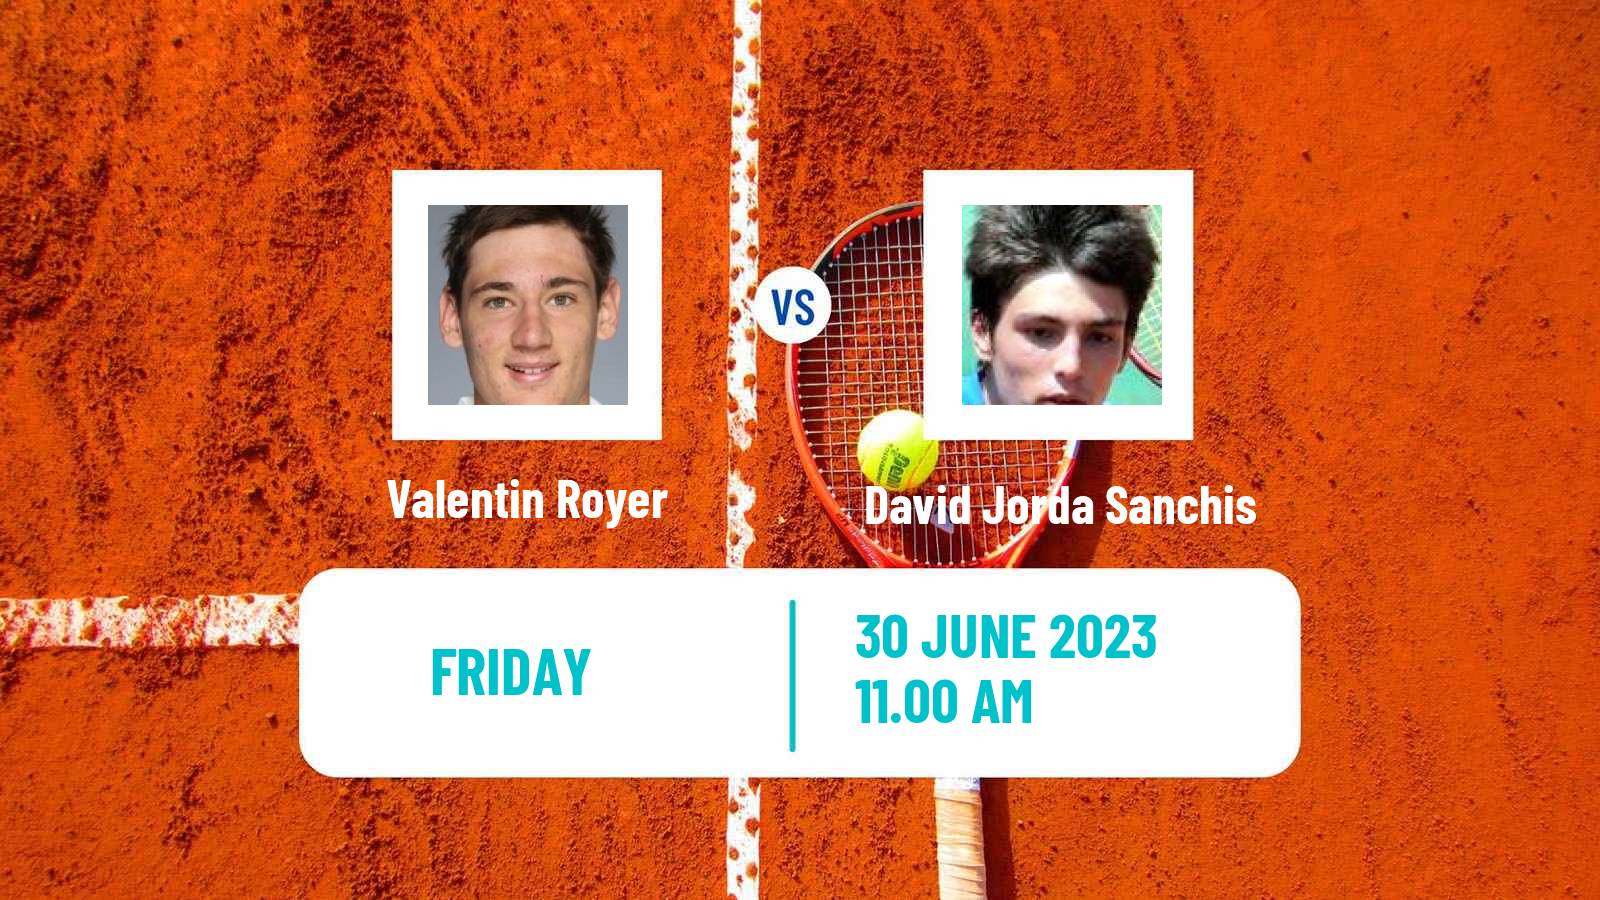 Tennis ITF M25 Arlon Men Valentin Royer - David Jorda Sanchis